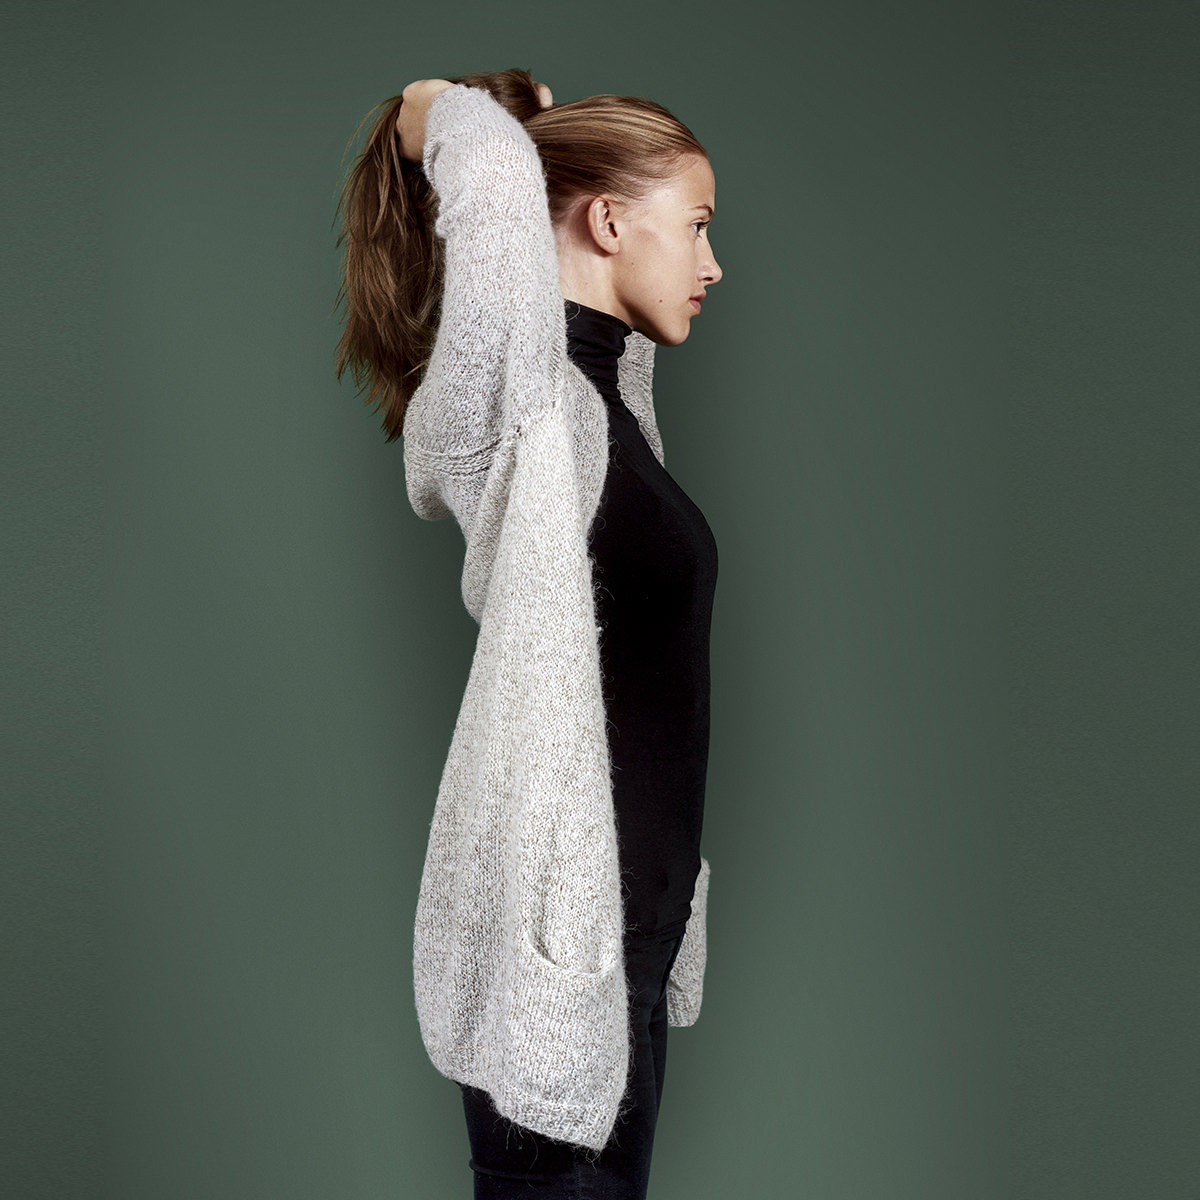 KBG04 – Icelandic Knitter – Hélène Magnússon